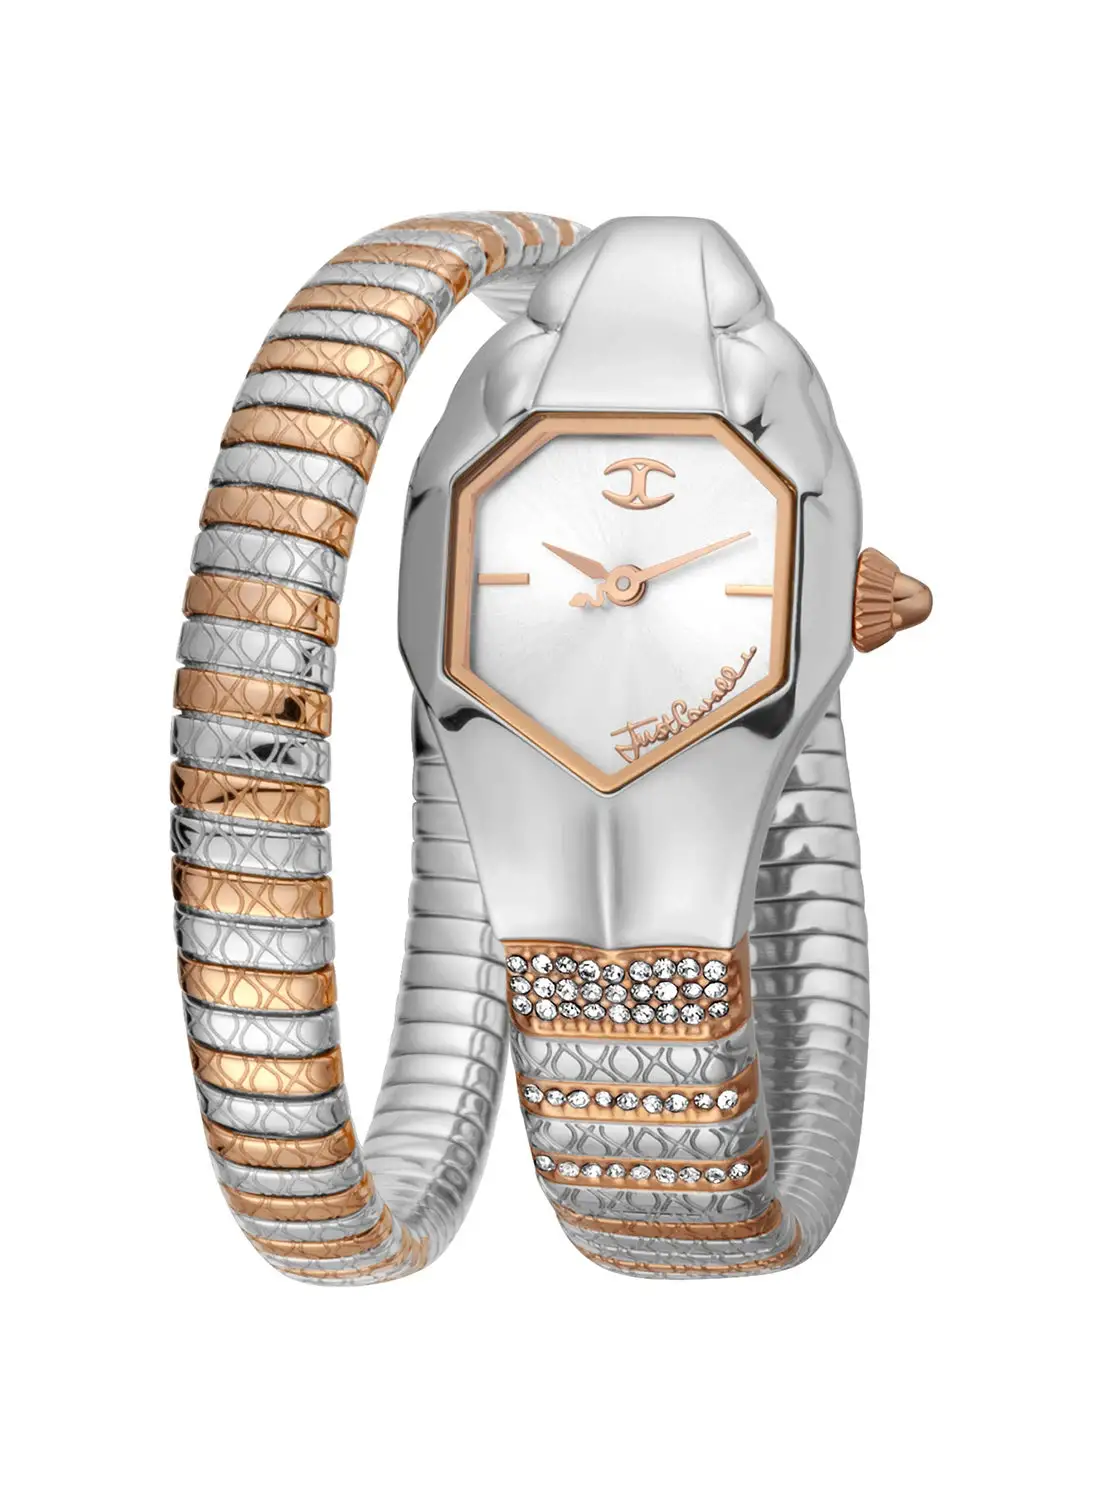 Justcavalli Women's Analog Hexagon Shape Stainless Steel Wrist Watch JC1L113M0055 - 22 Mm